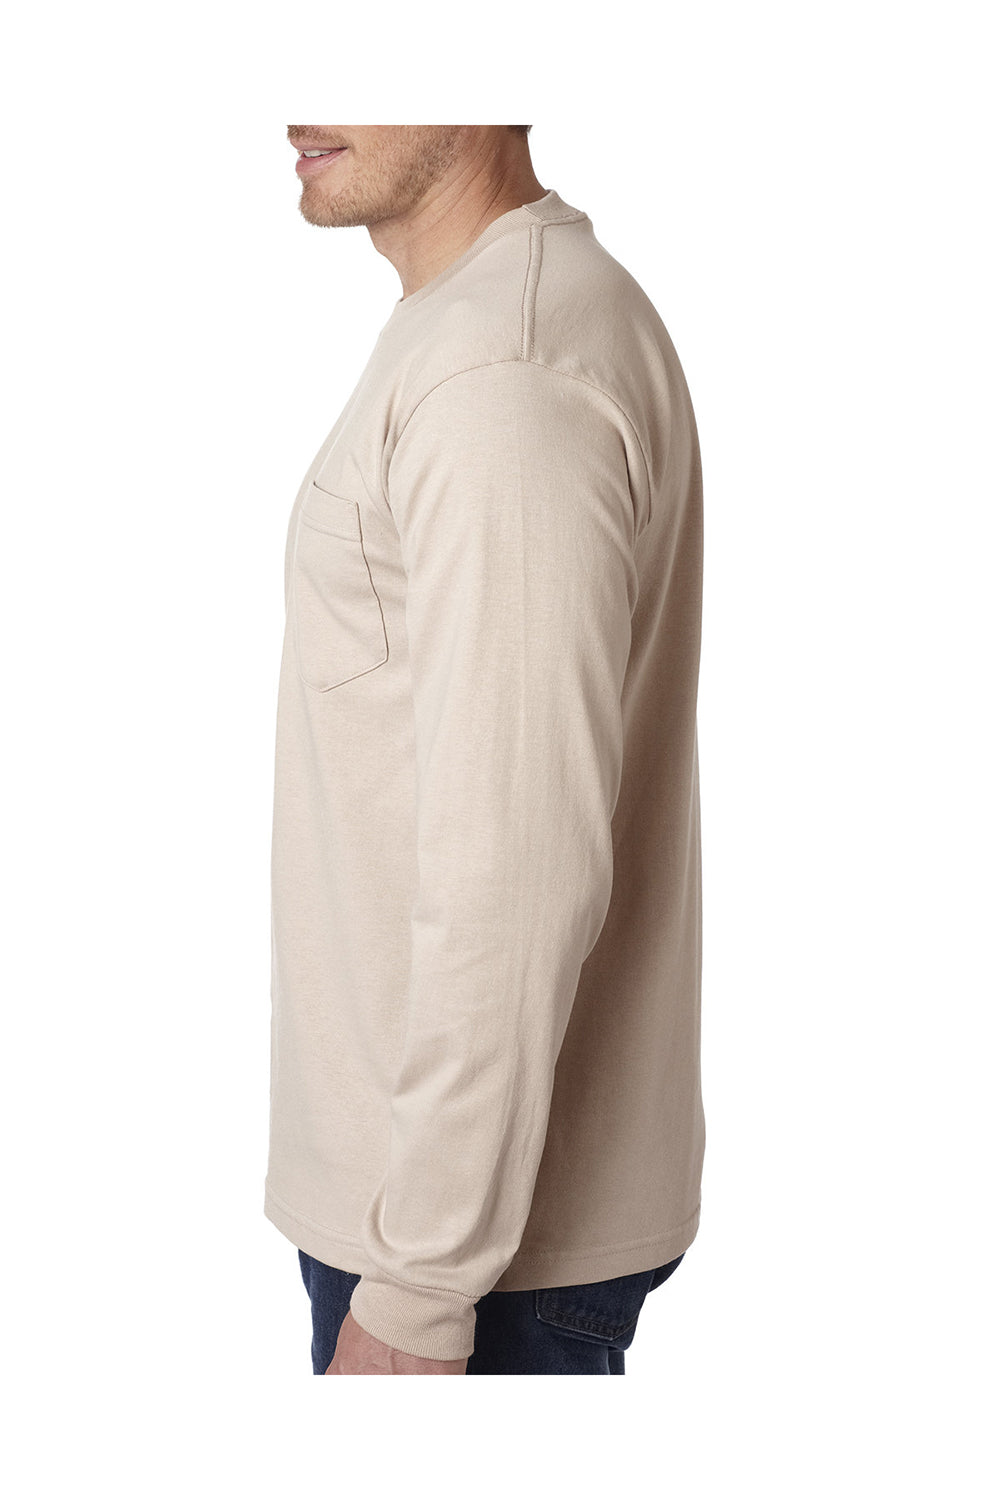 Bayside BA8100 Mens USA Made Long Sleeve Crewneck T-Shirt w/ Pocket Sand Model Side